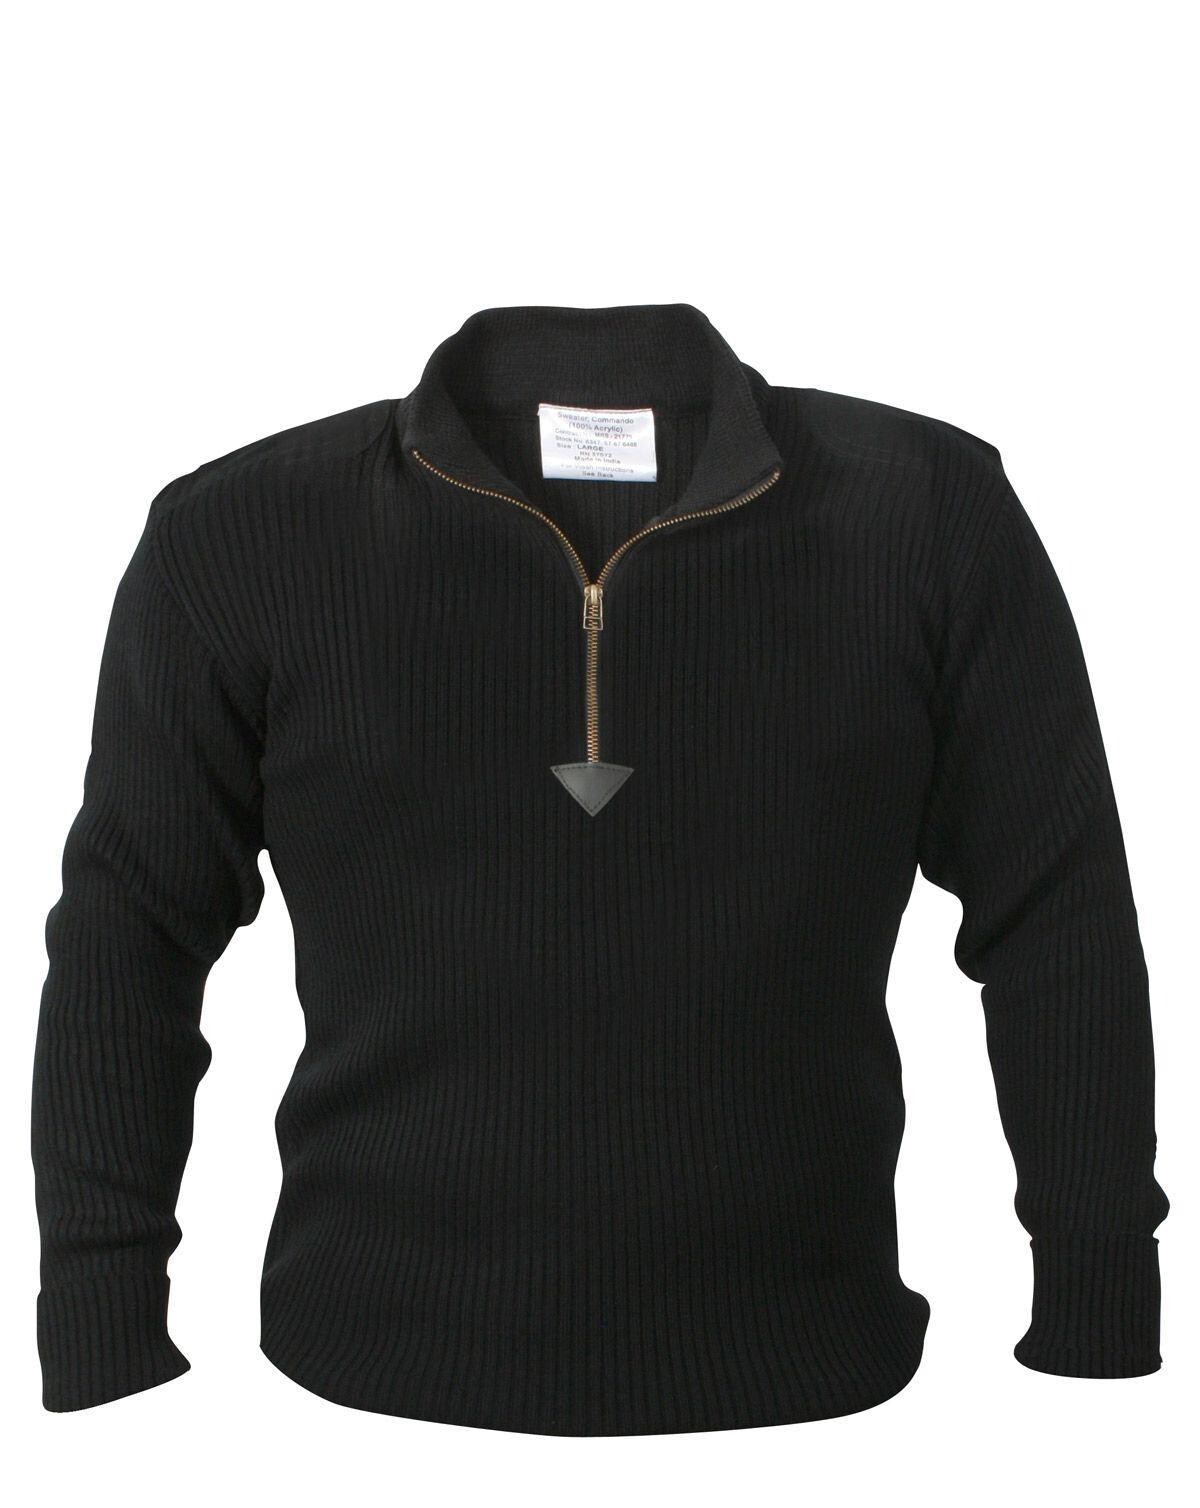 7: Rothco Commando Sweater (Sort, M)